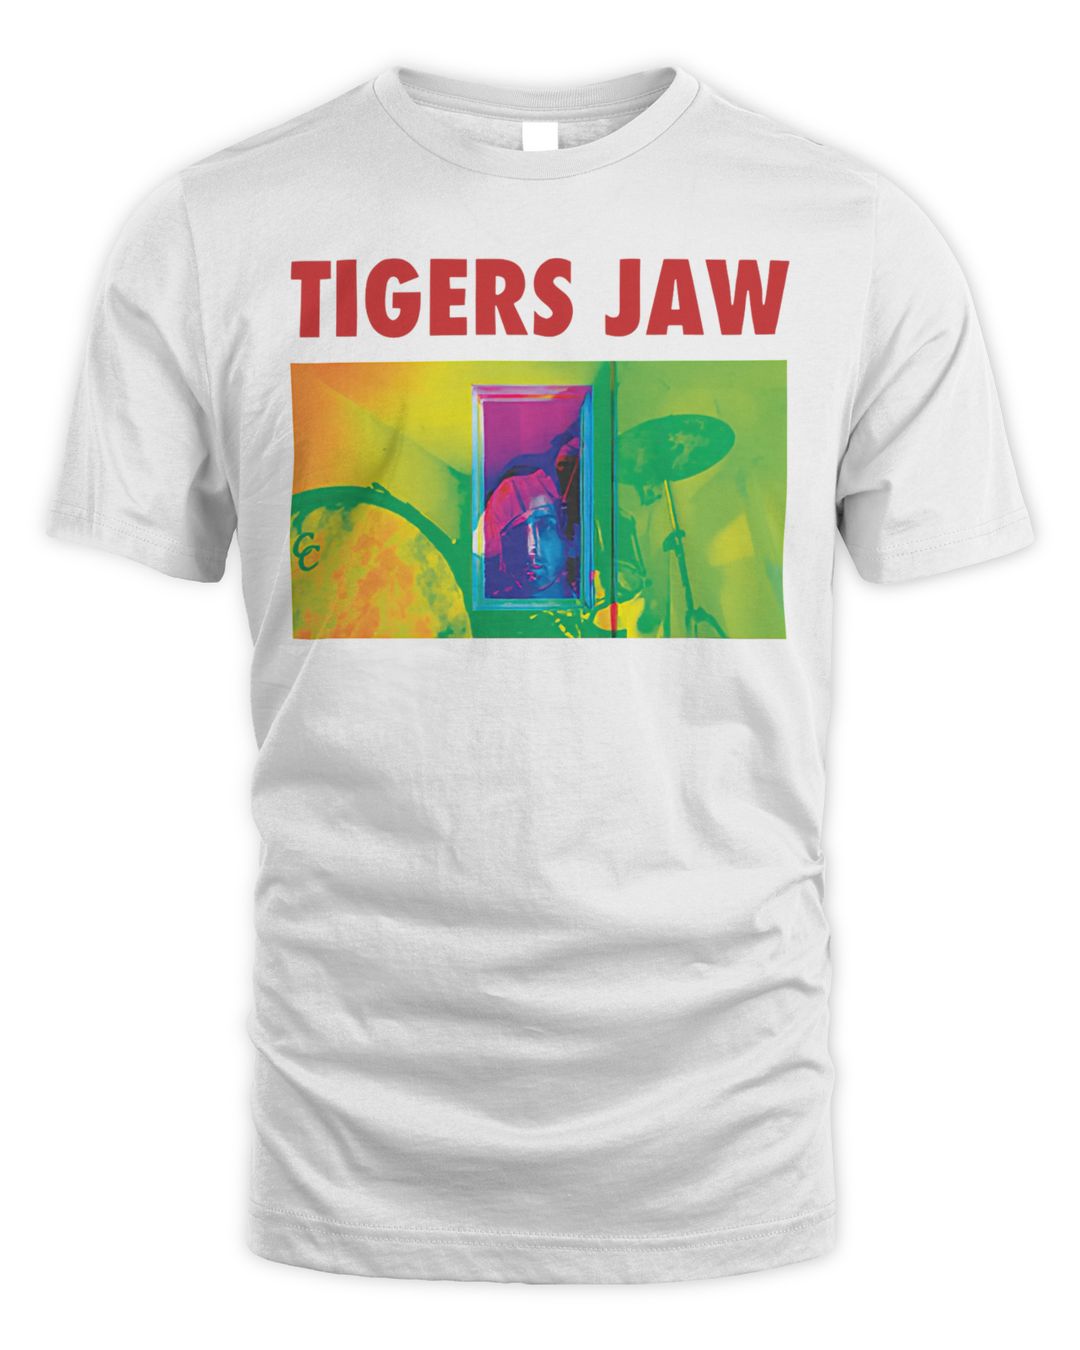 Tigers Jaw Merch New Detroit Shirt